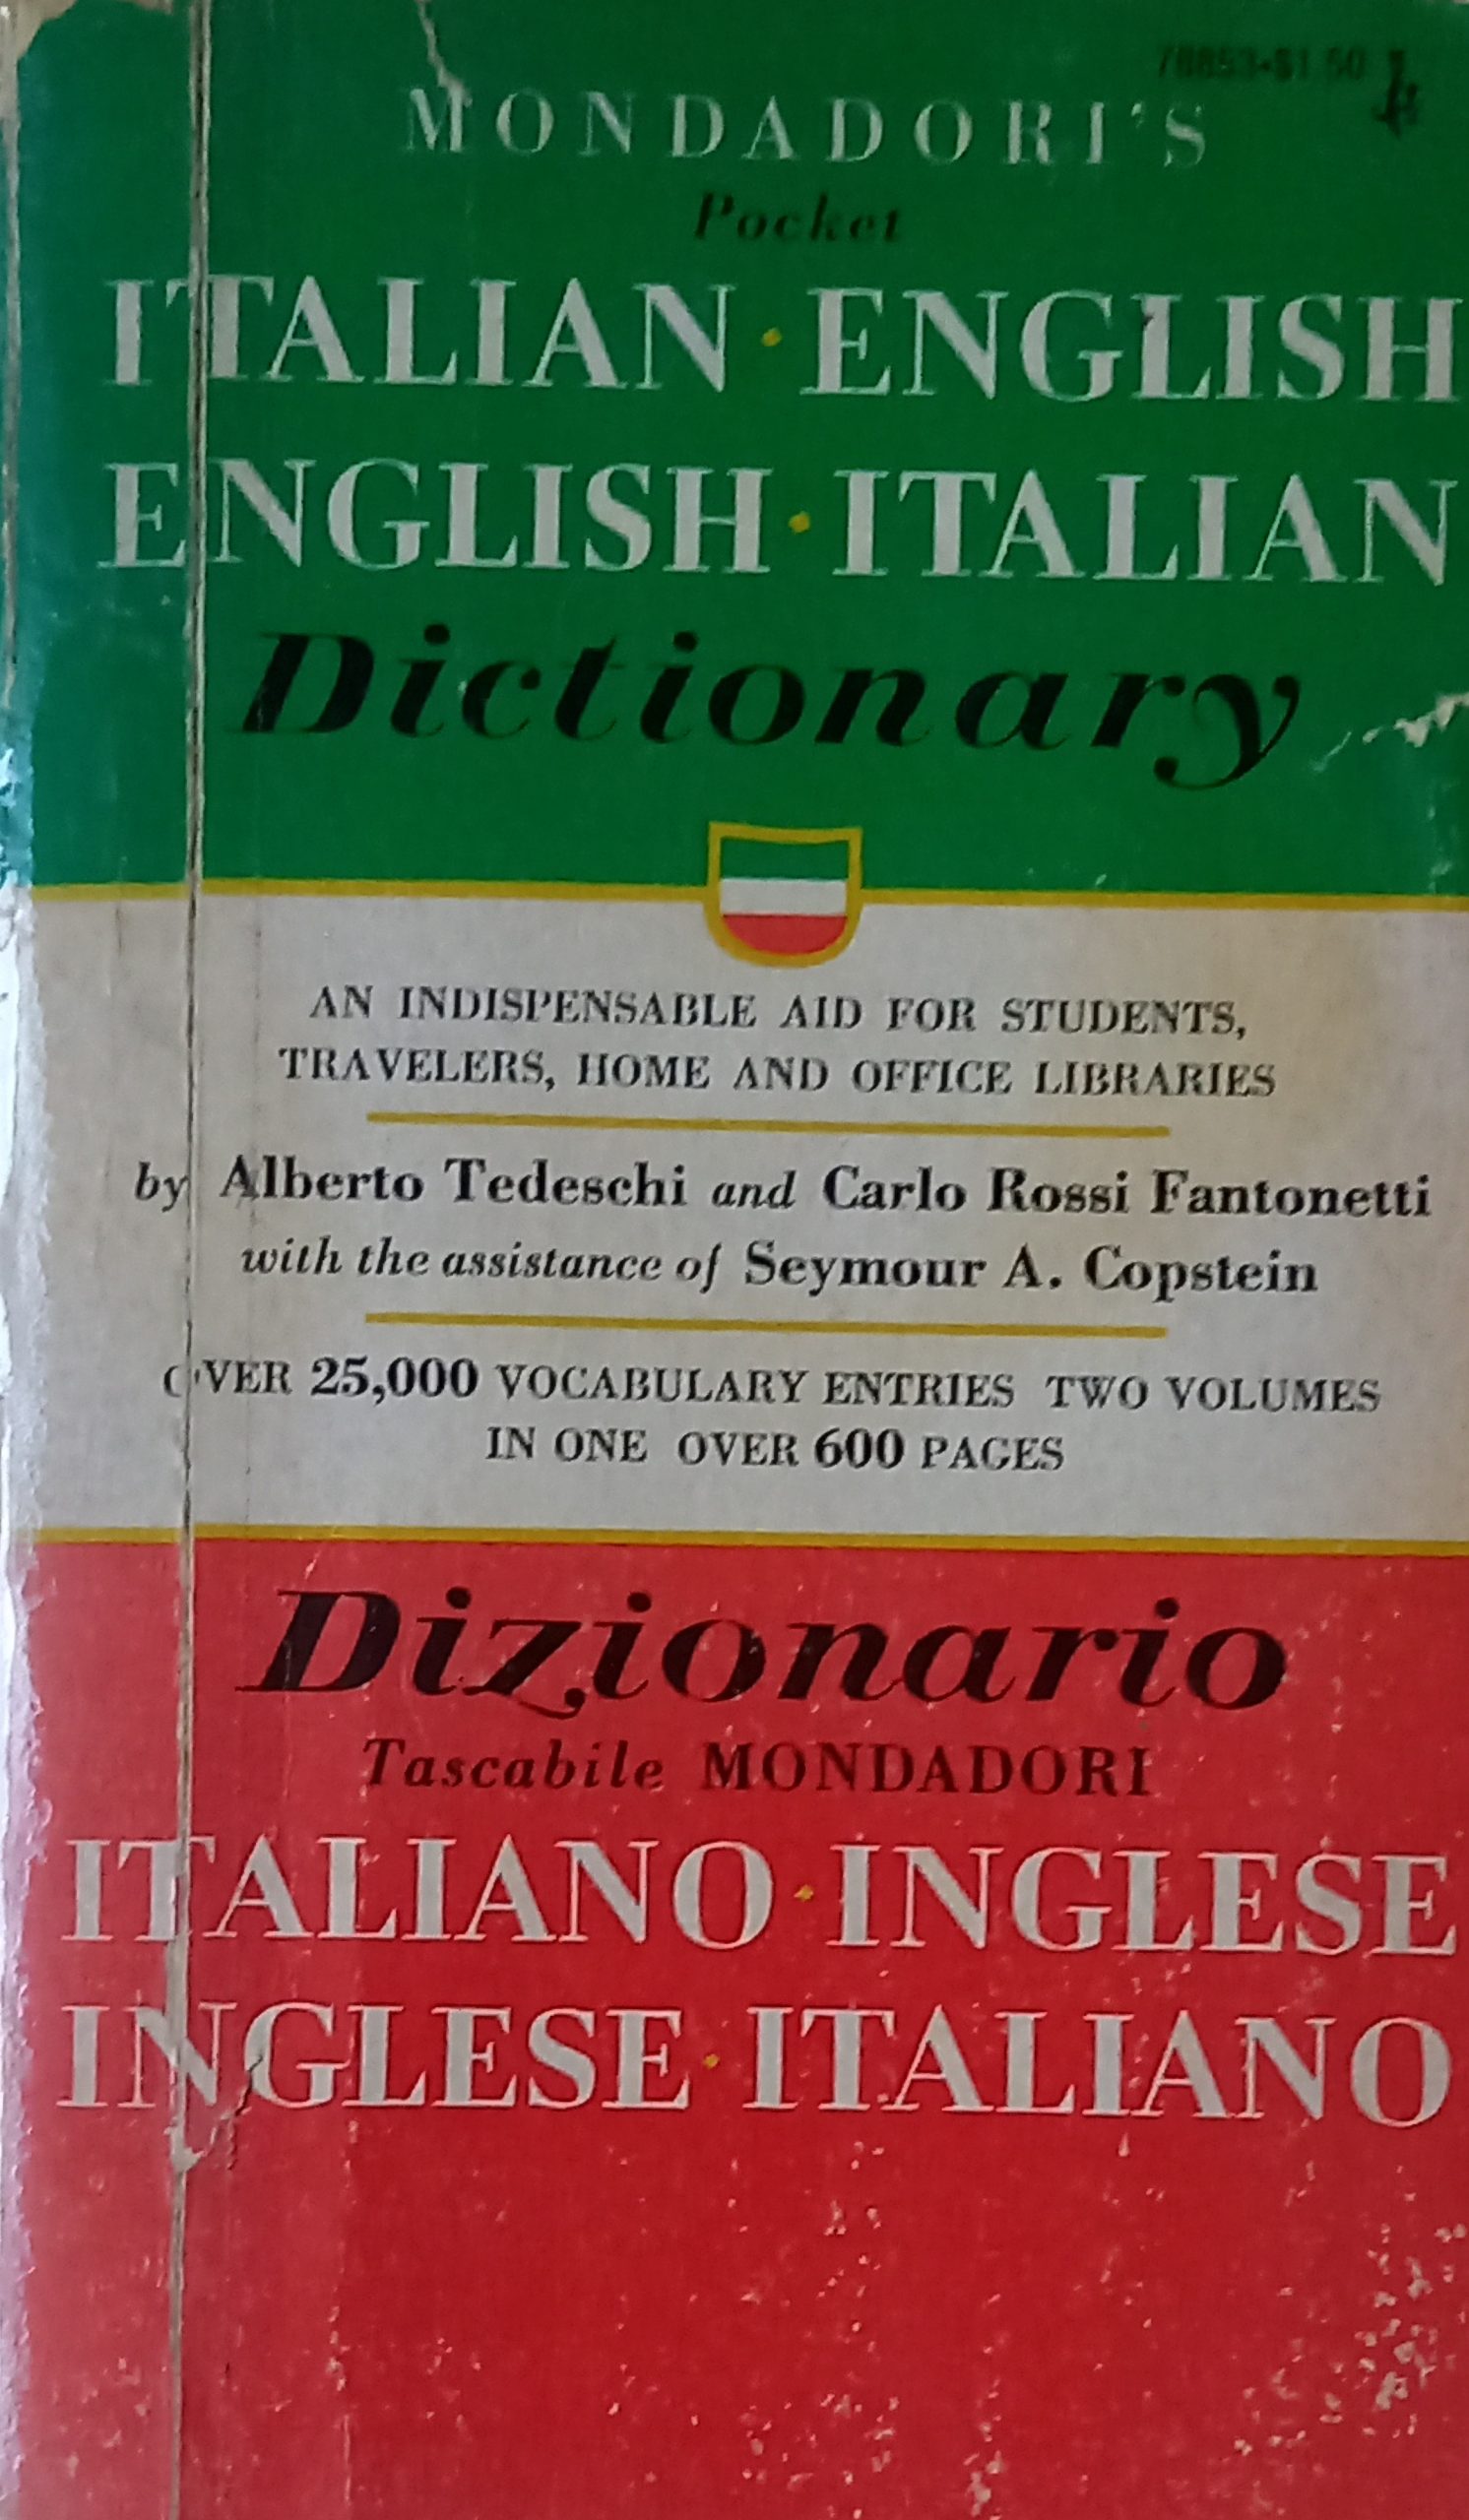 Italian-English / English-Italian Dictionary - SprachenPost 